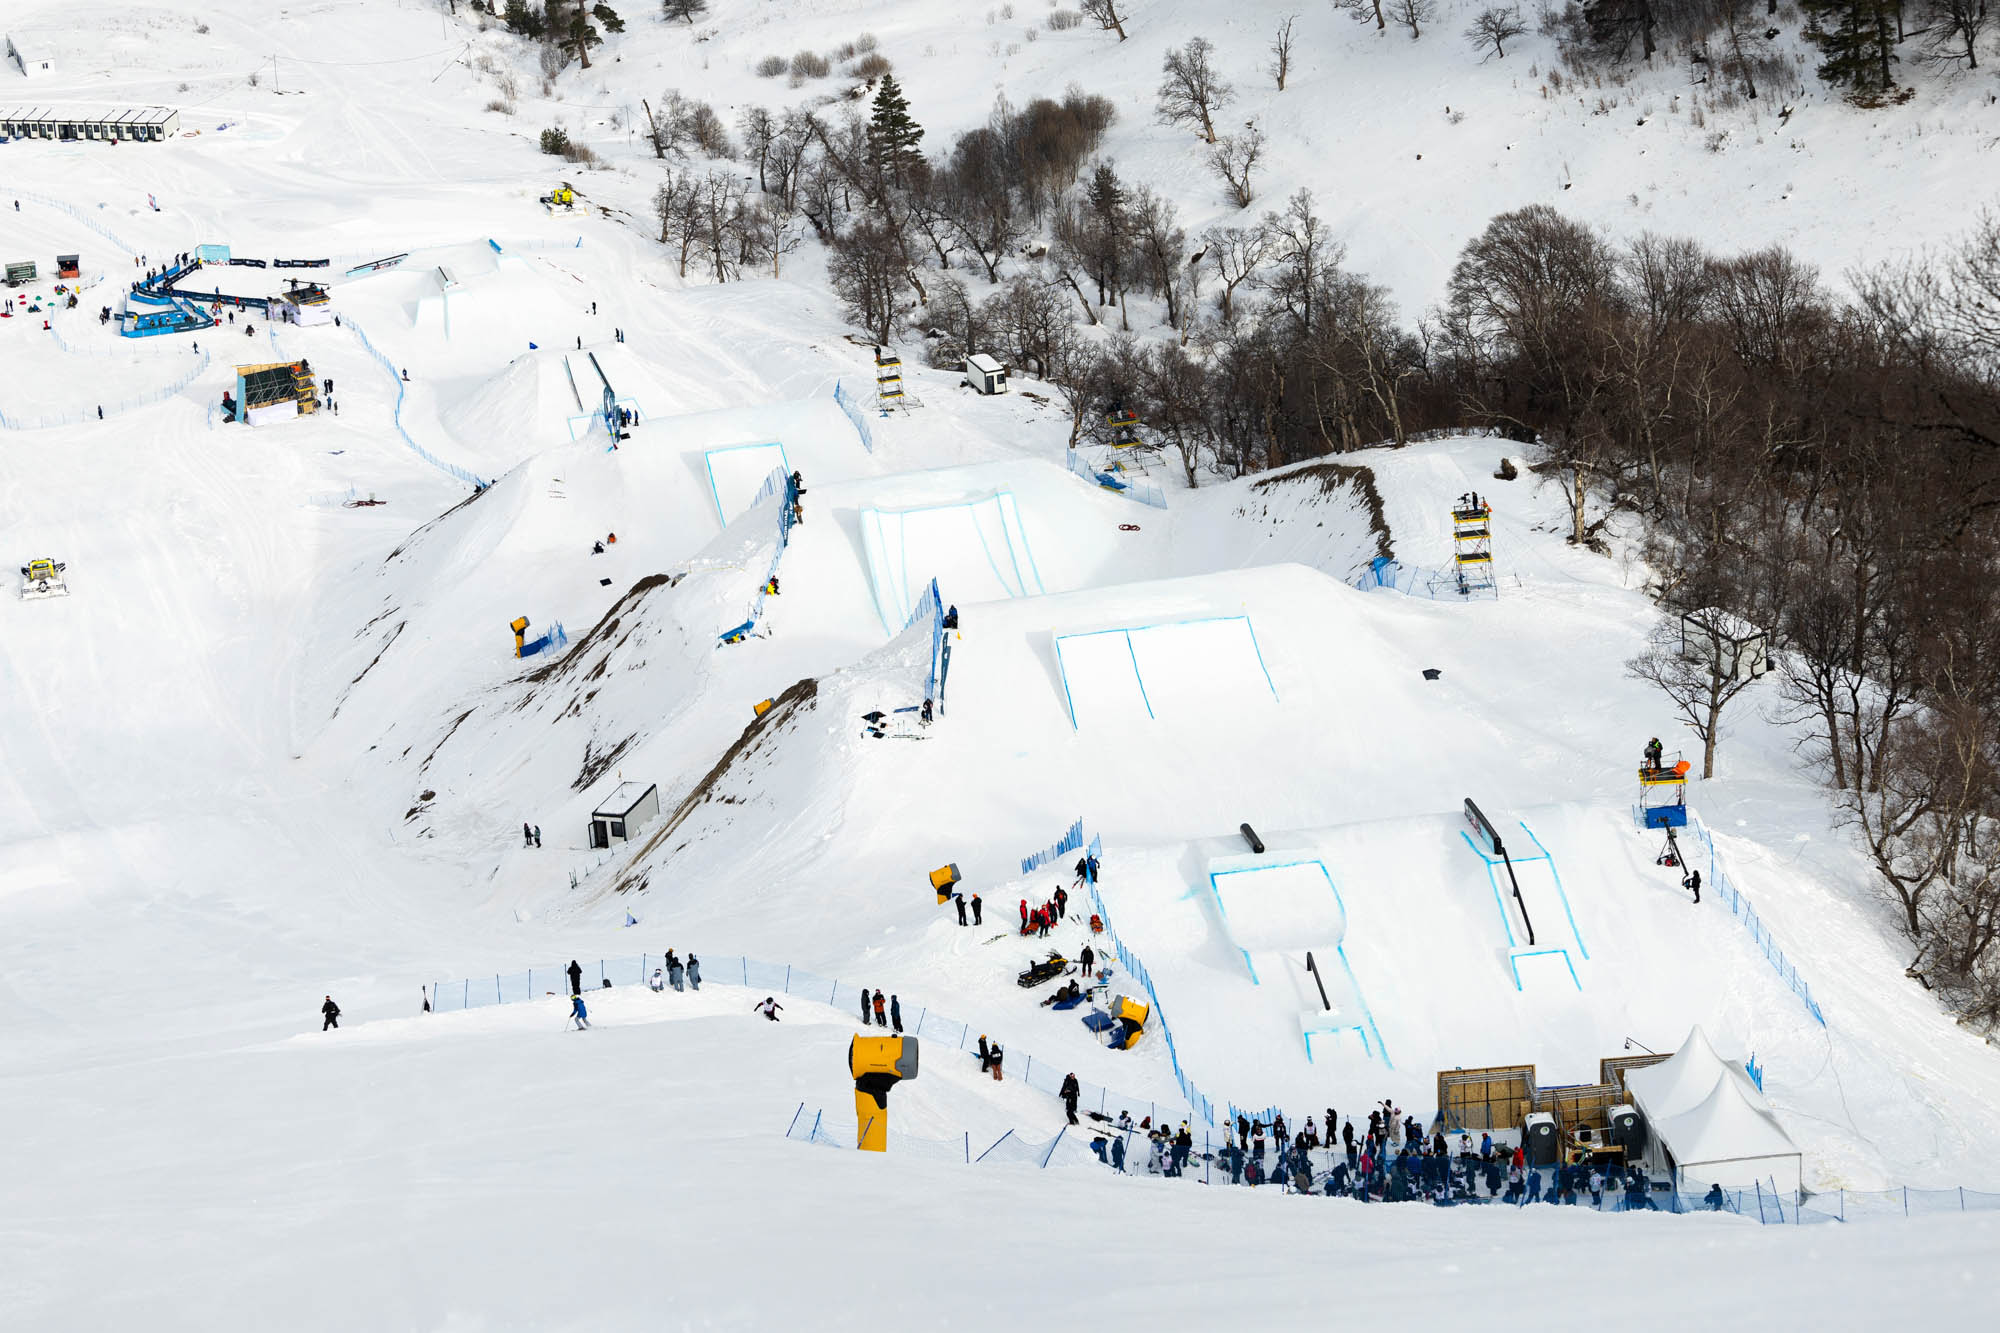 FIS Freestyle Ski, Snowboard and Freeski World Championships - Bakuriani GEO - Slopestyle © Miha Matavz/FIS